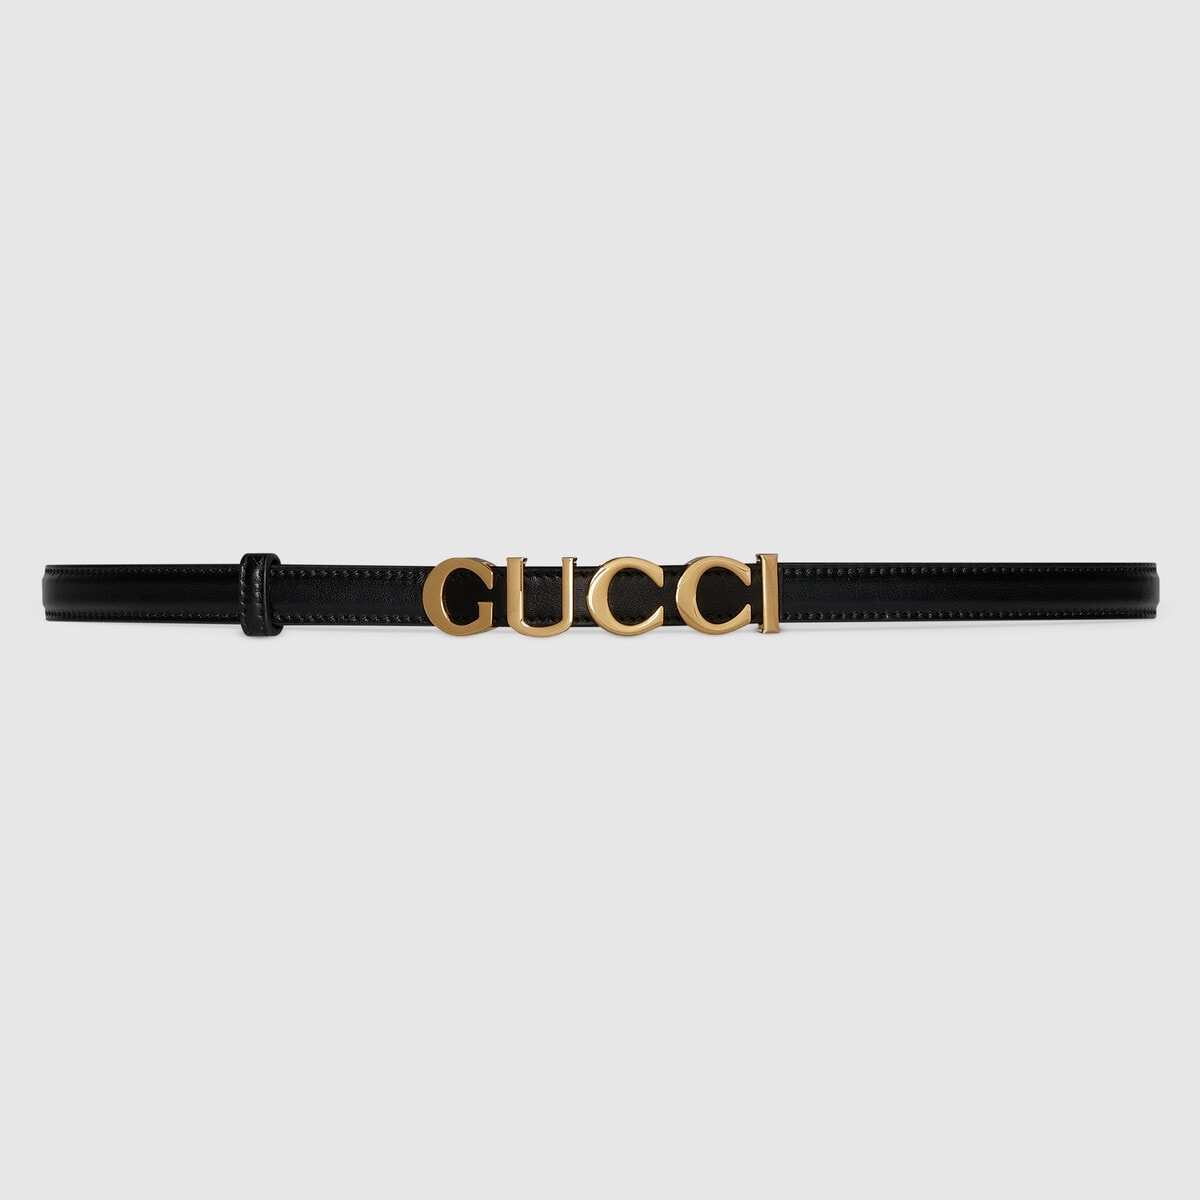 Gucci buckle thin belt - 1